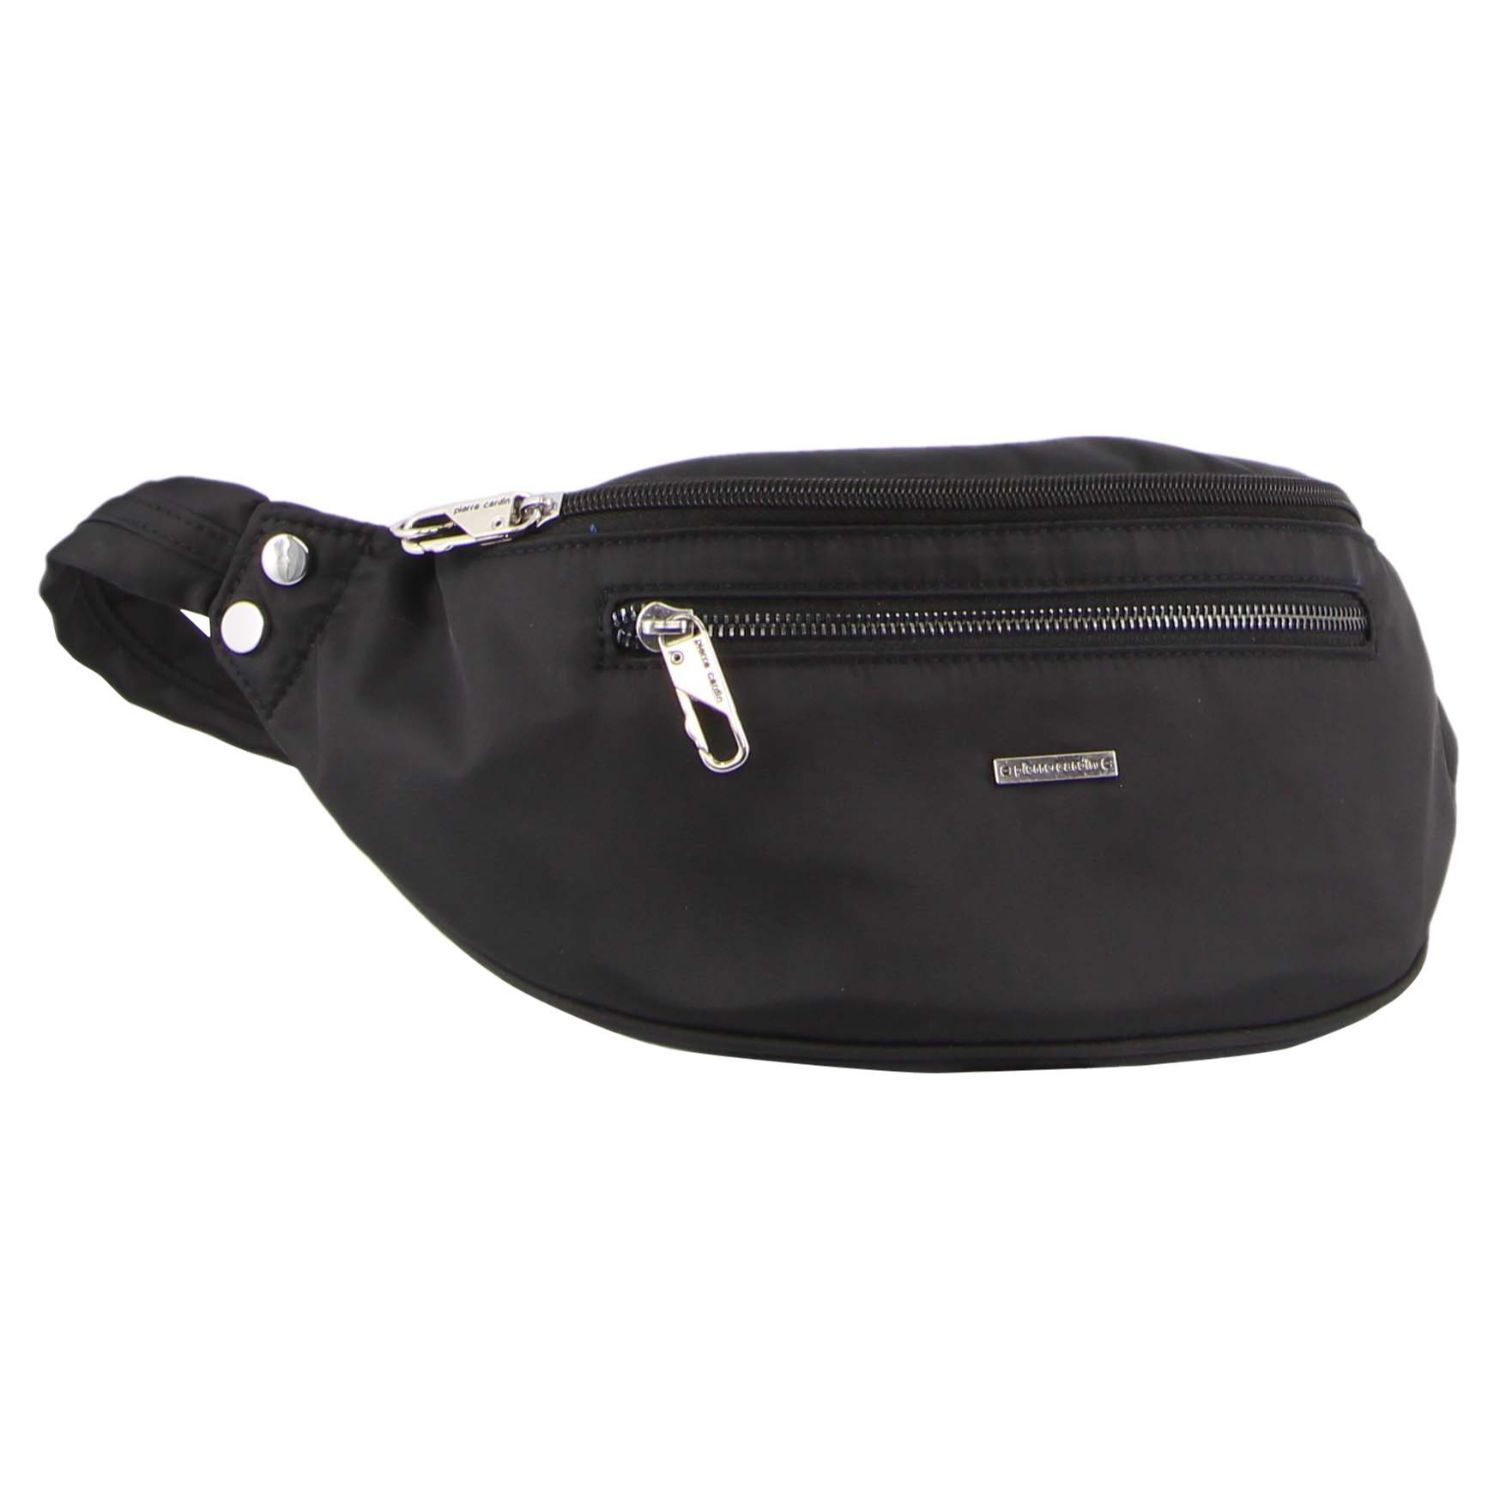 The Pierre Cardin Slash-Proof waist bag is an attractive 